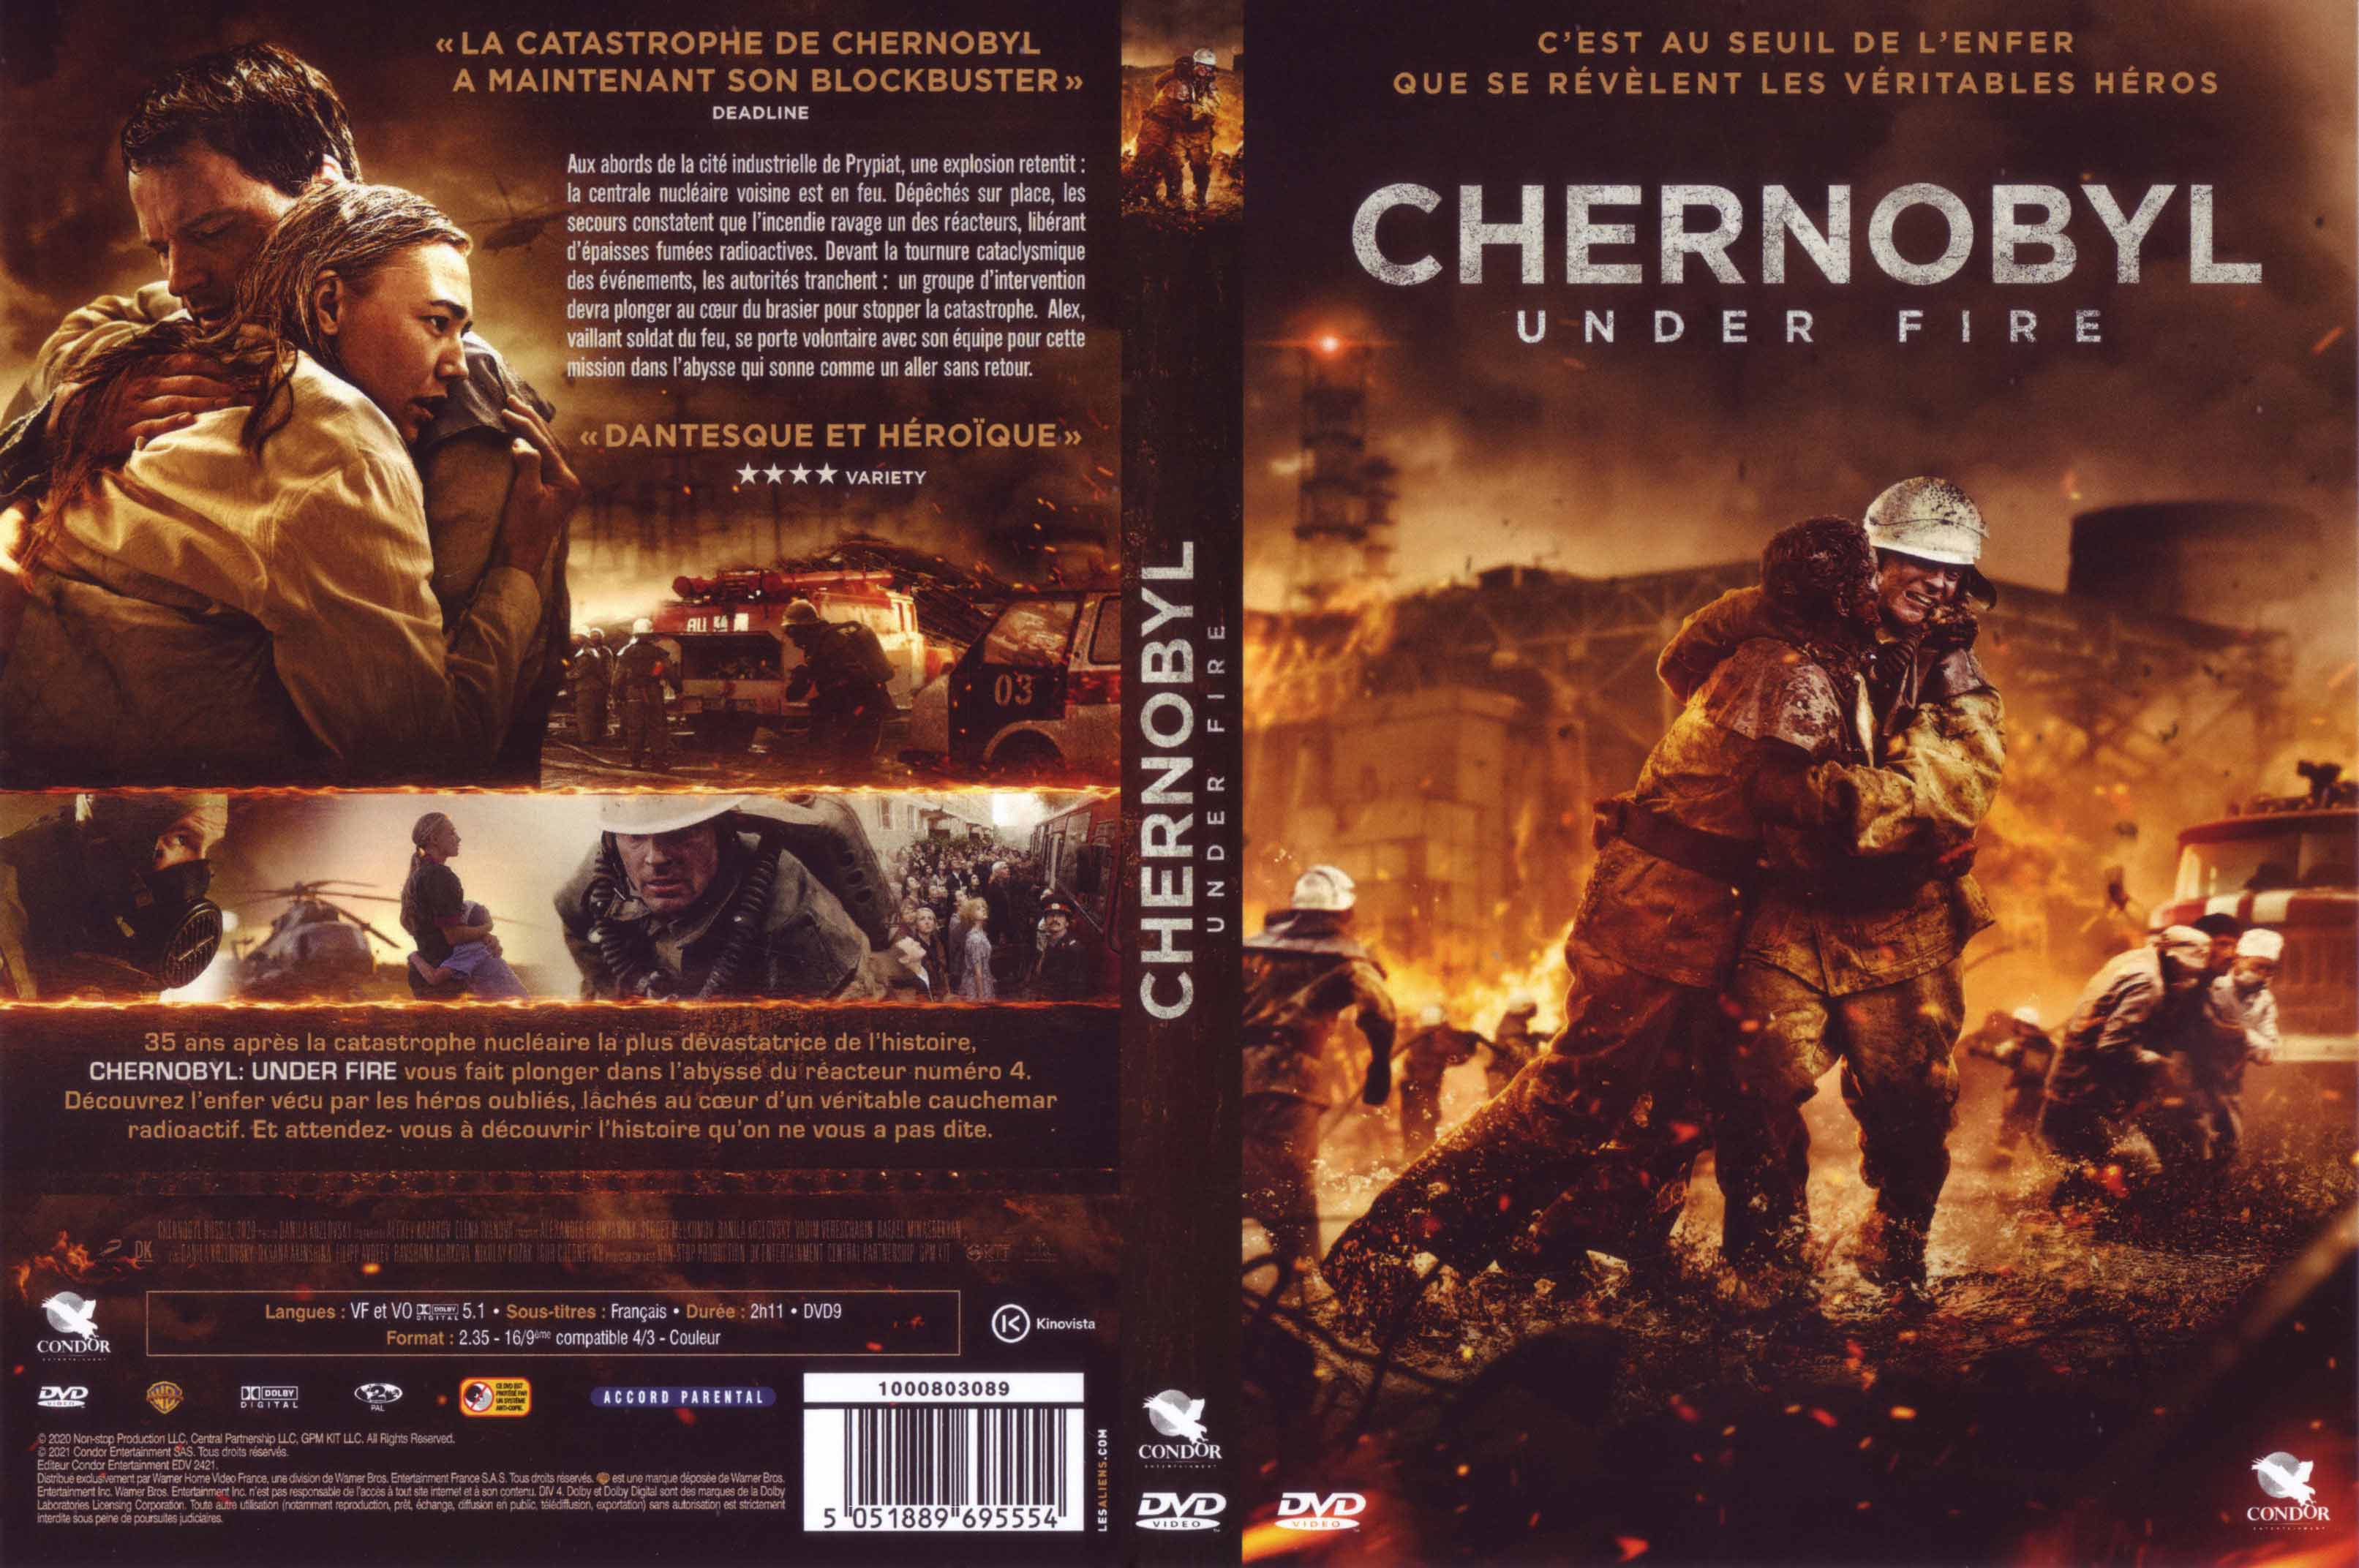 Jaquette DVD Chernobyl under fire